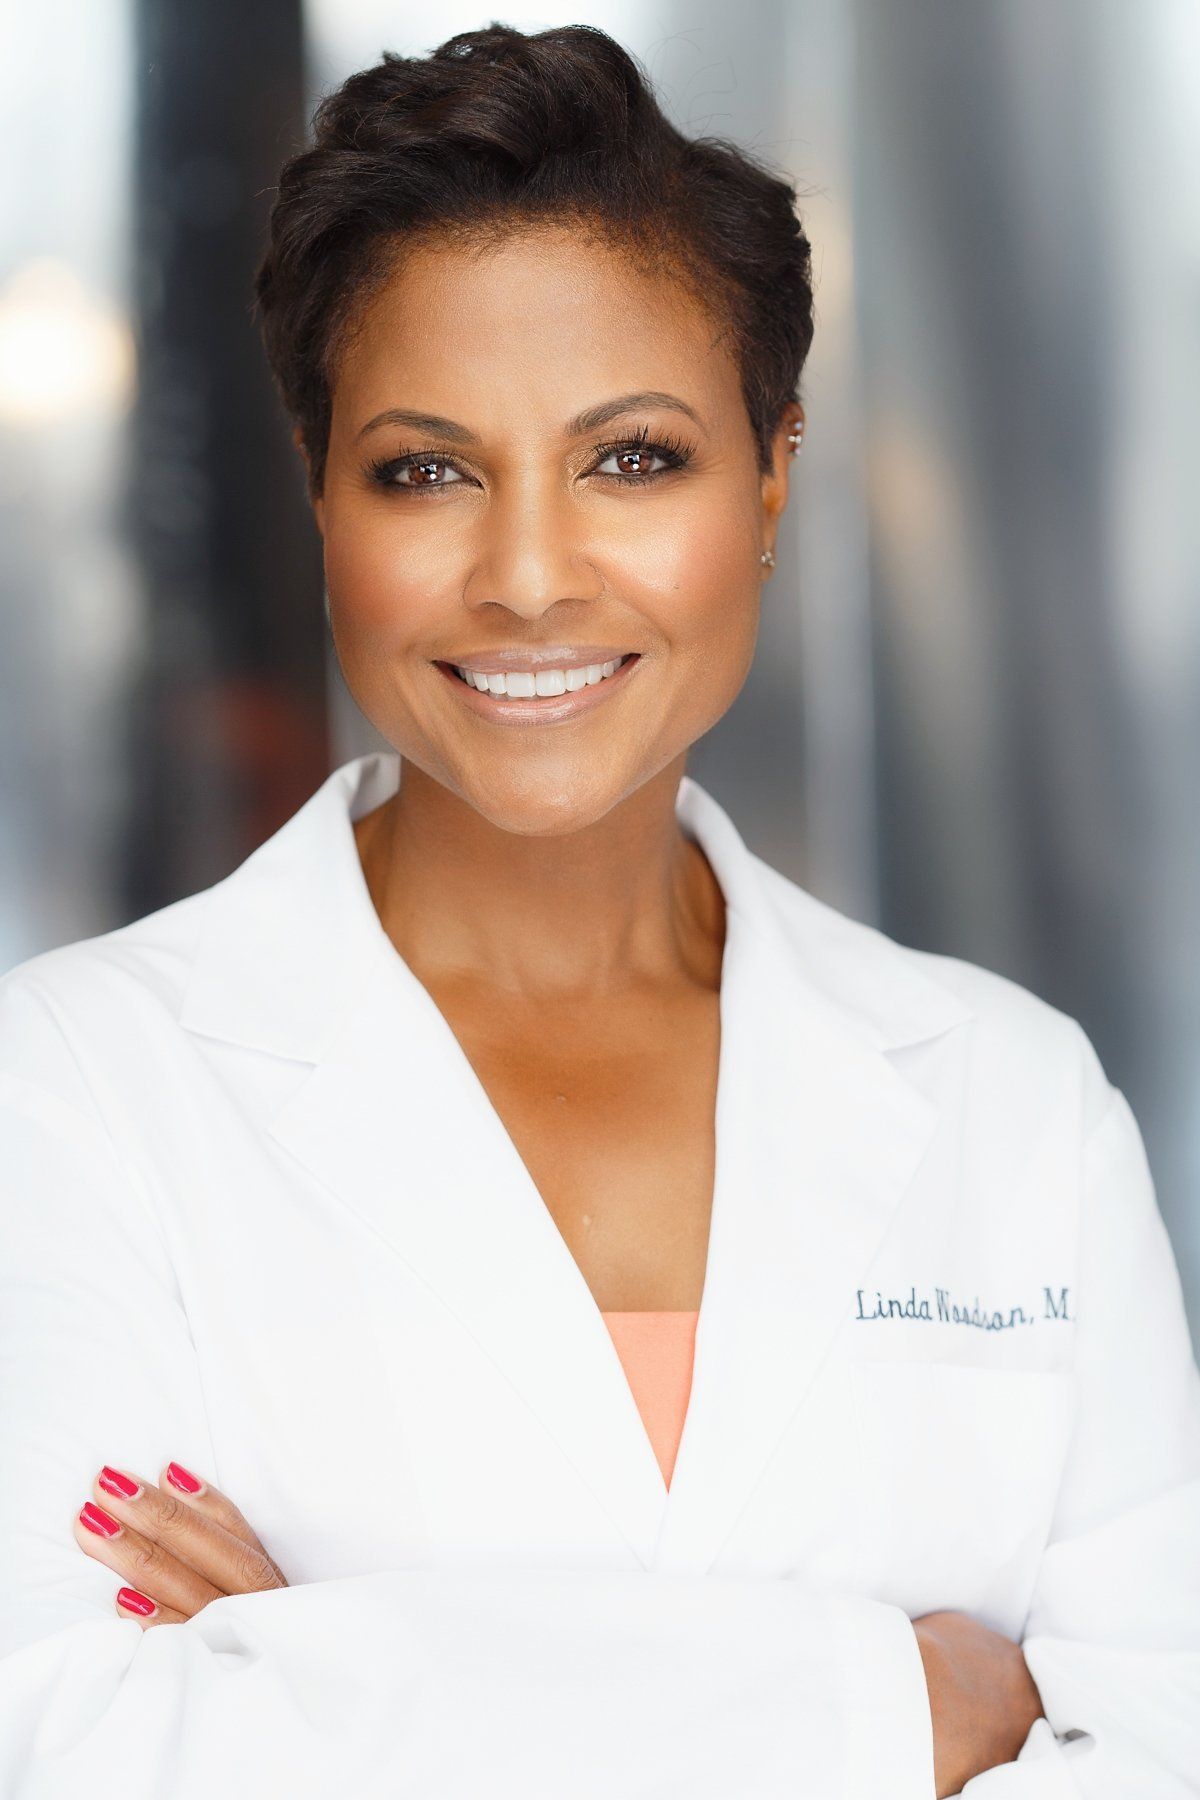 Linda S. Woodson — Las Vegas, NV — Linda Woodson Dermatology